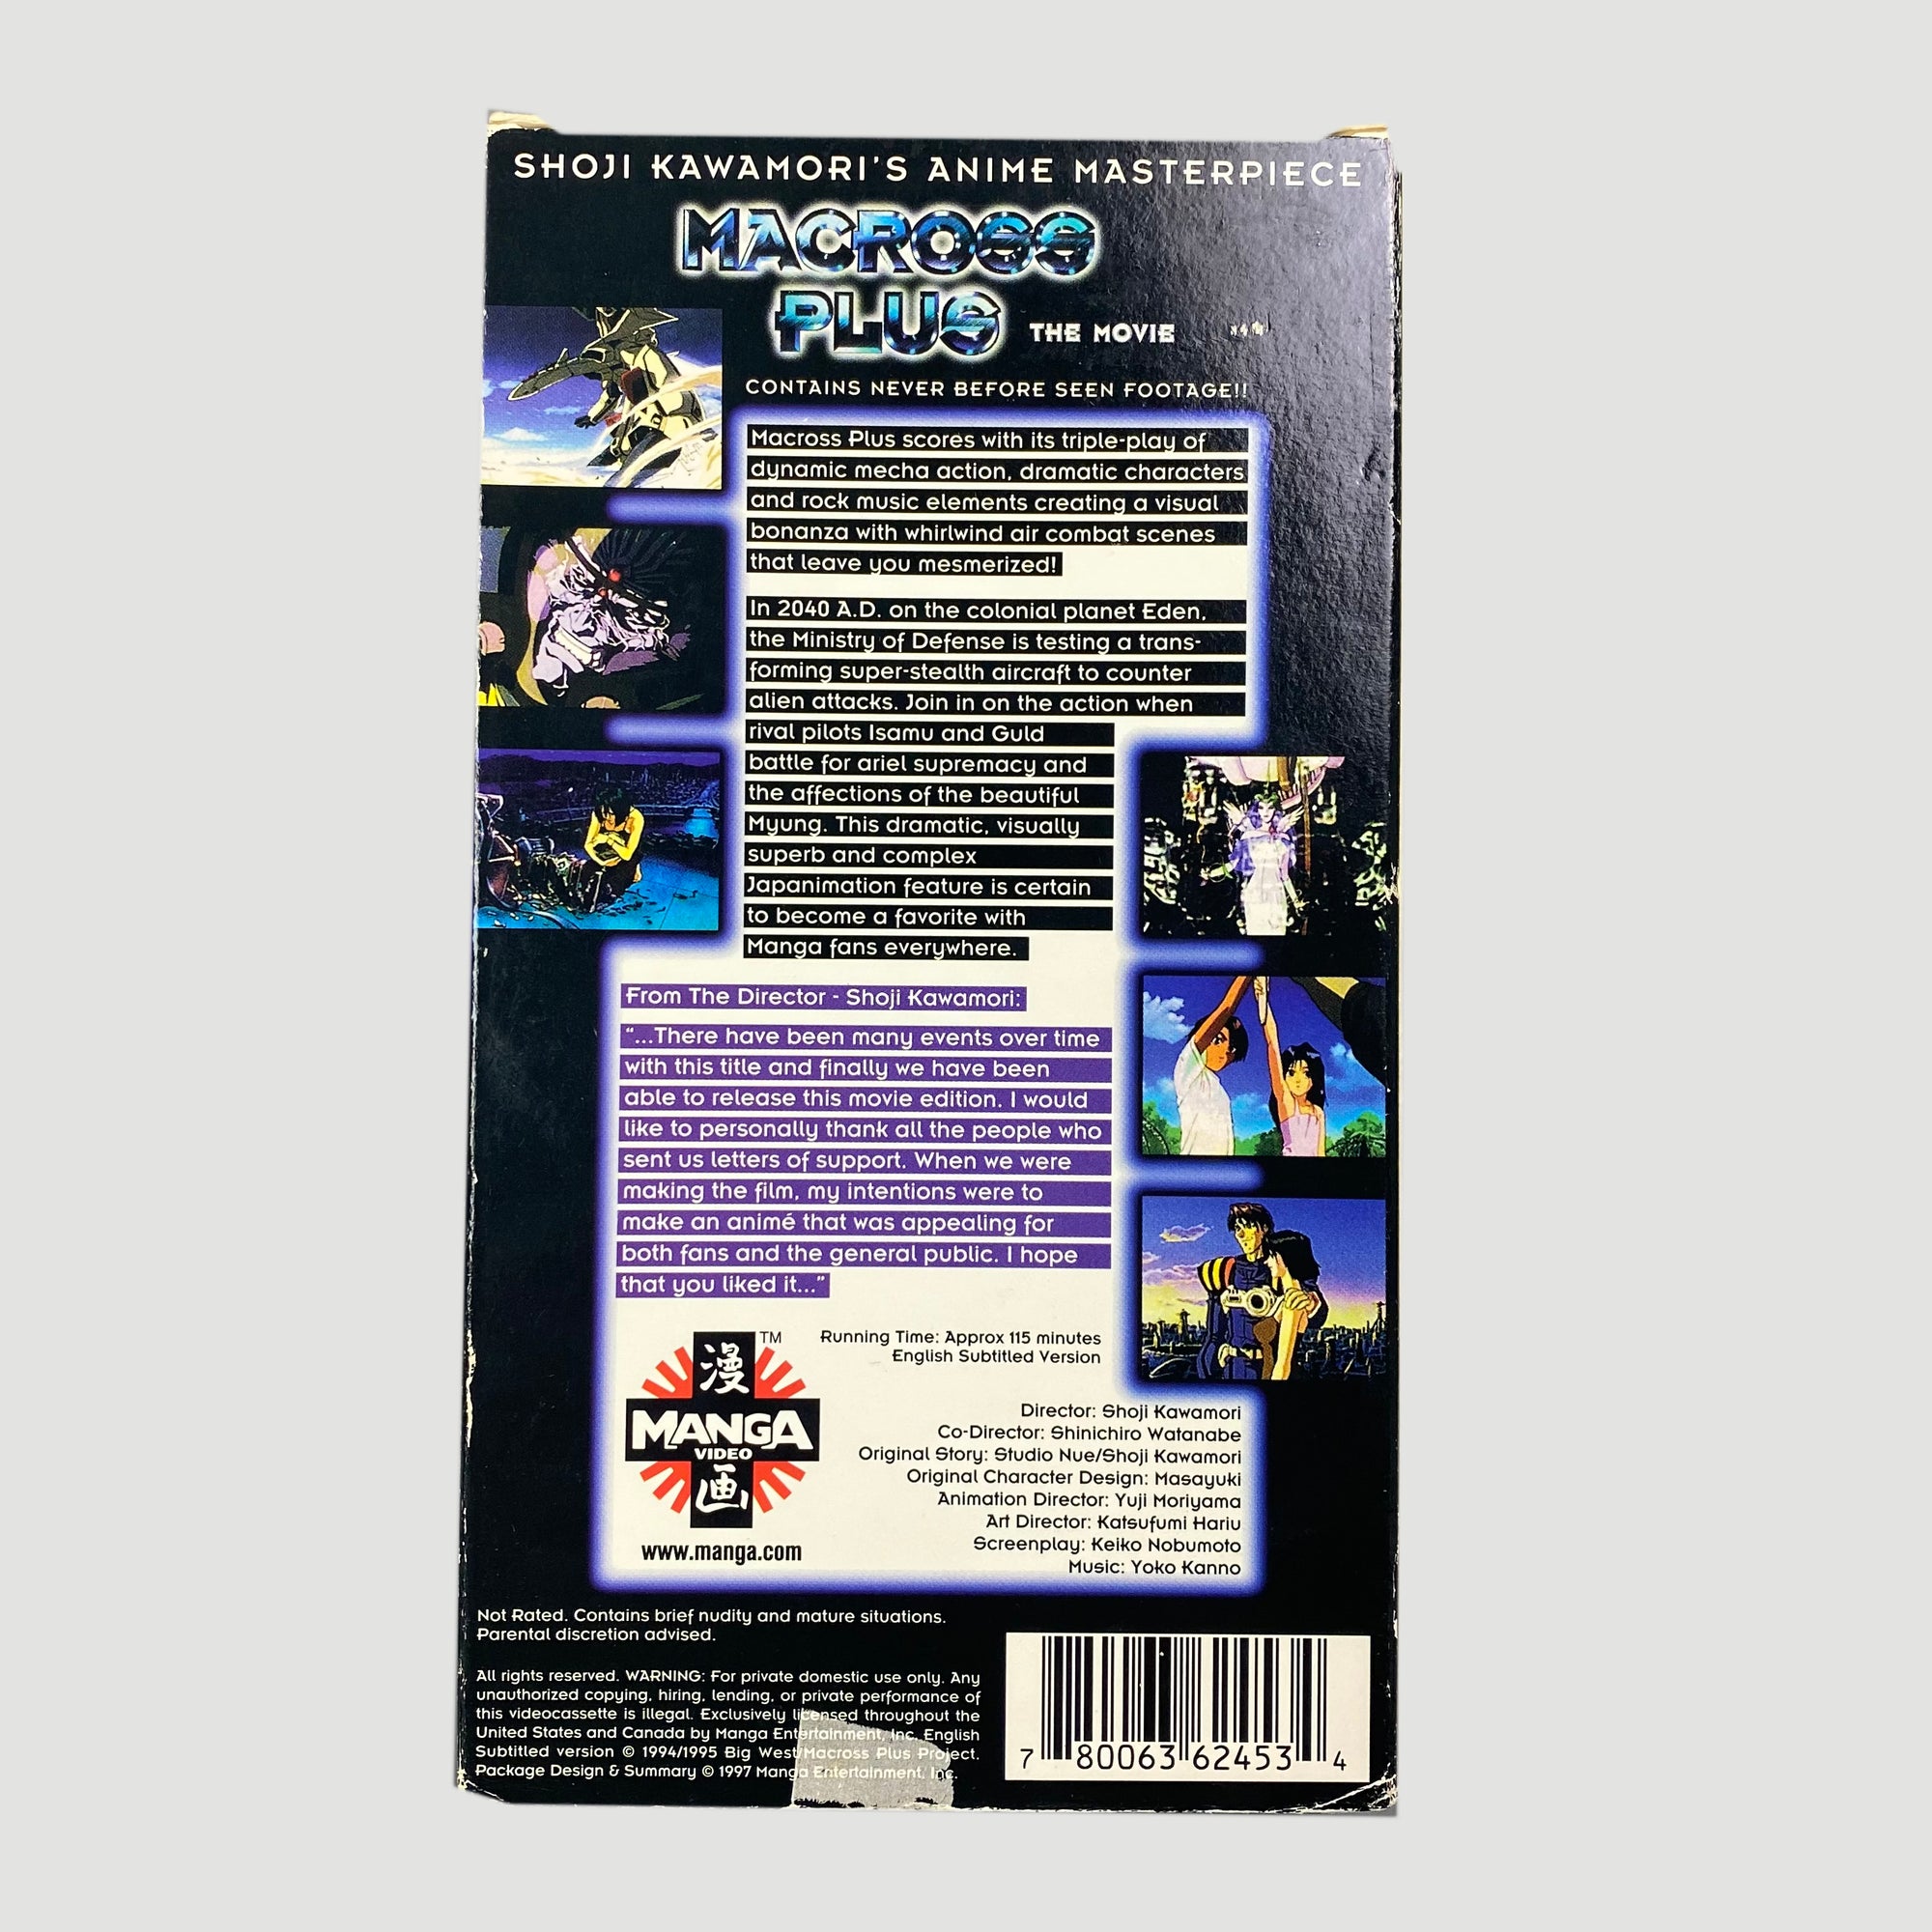 1997 'Macross Plus' NTSC VHS